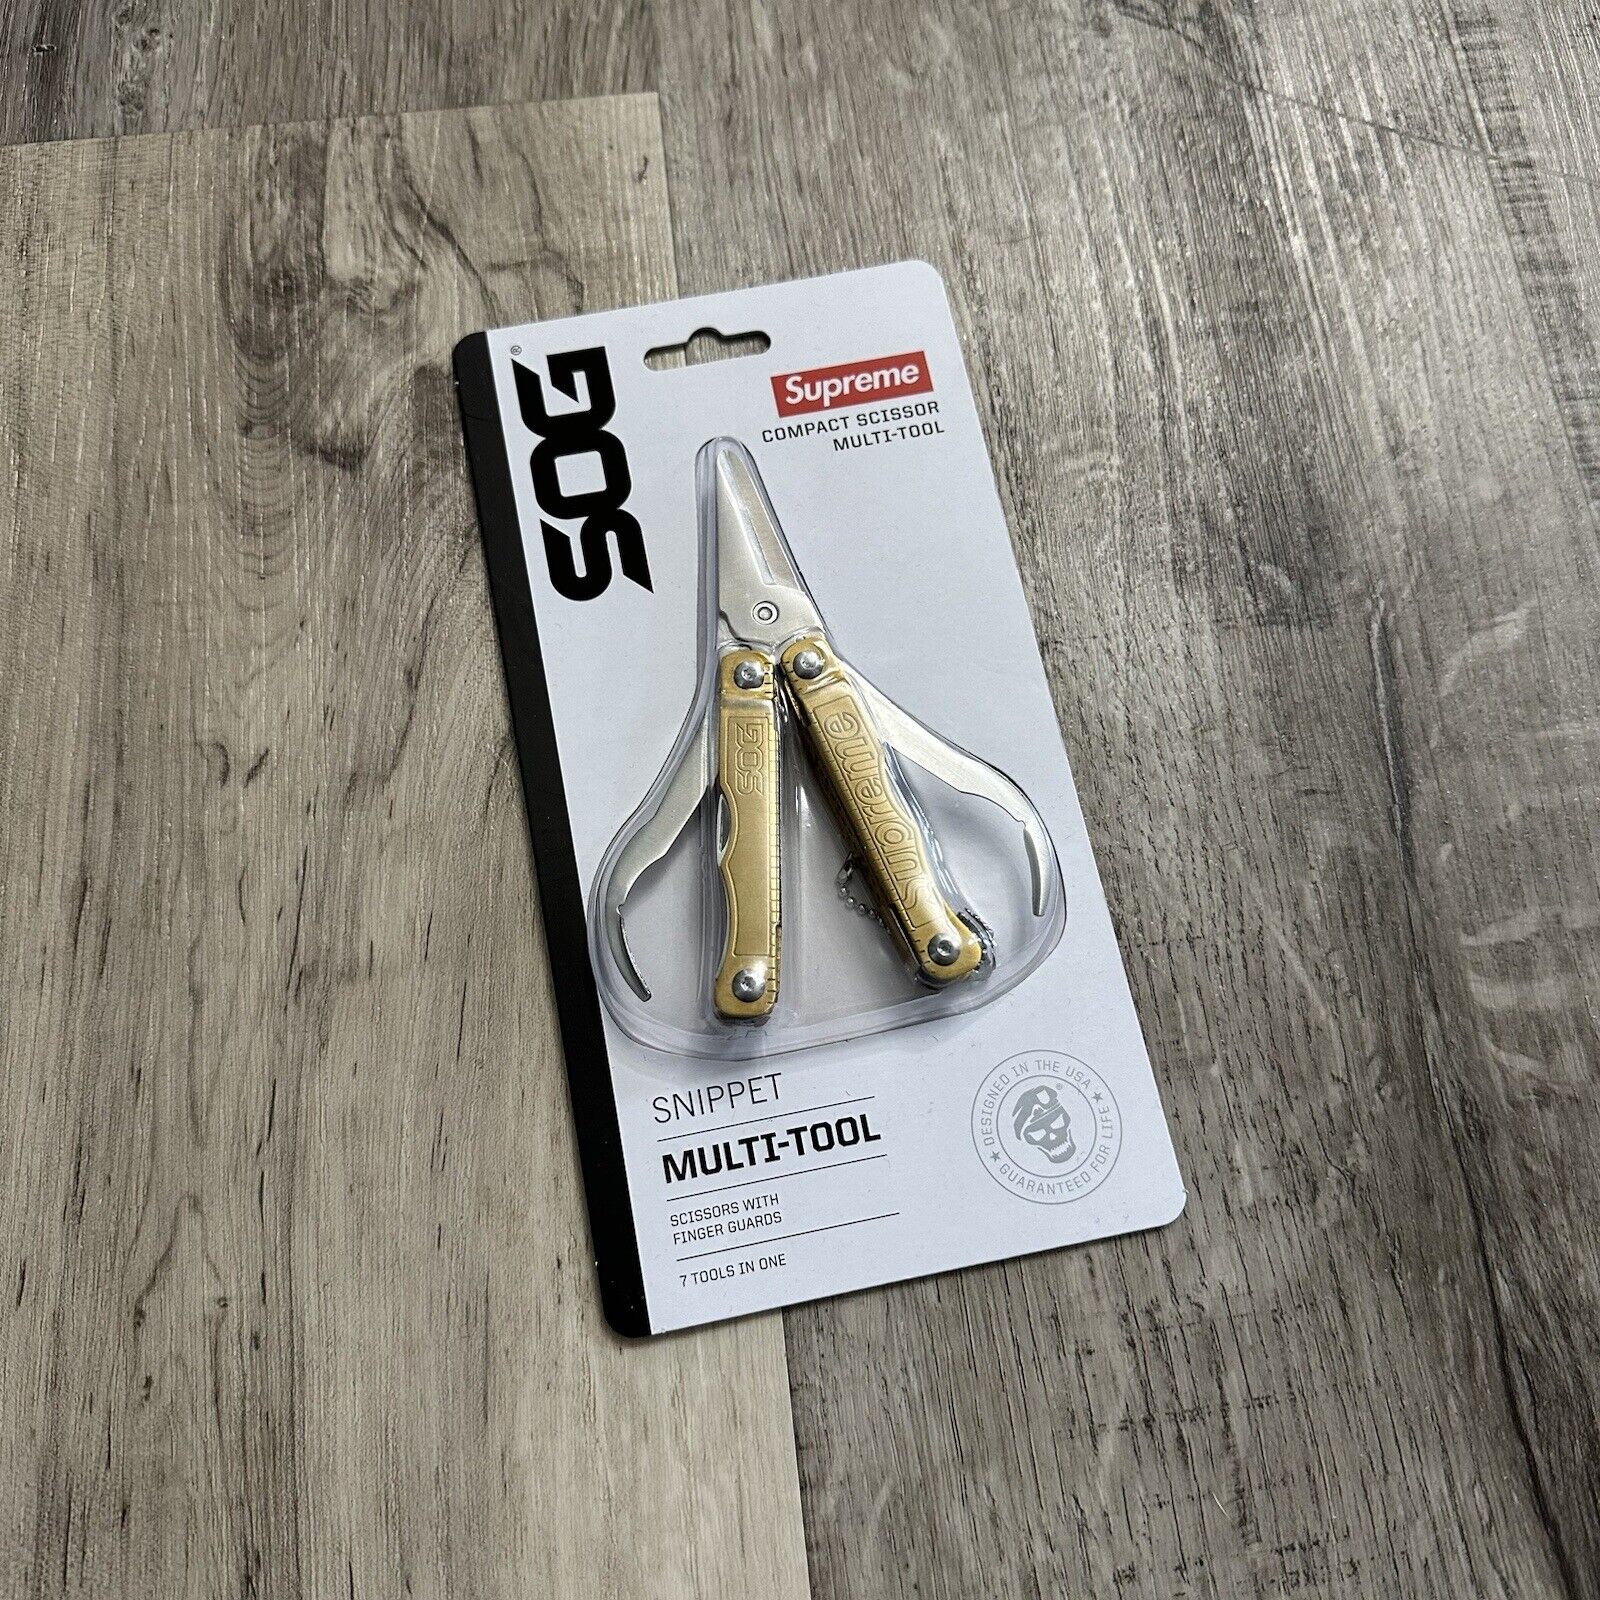 Supreme SOG Snippet Multi Tool Compact Scissor Gold - Brand New